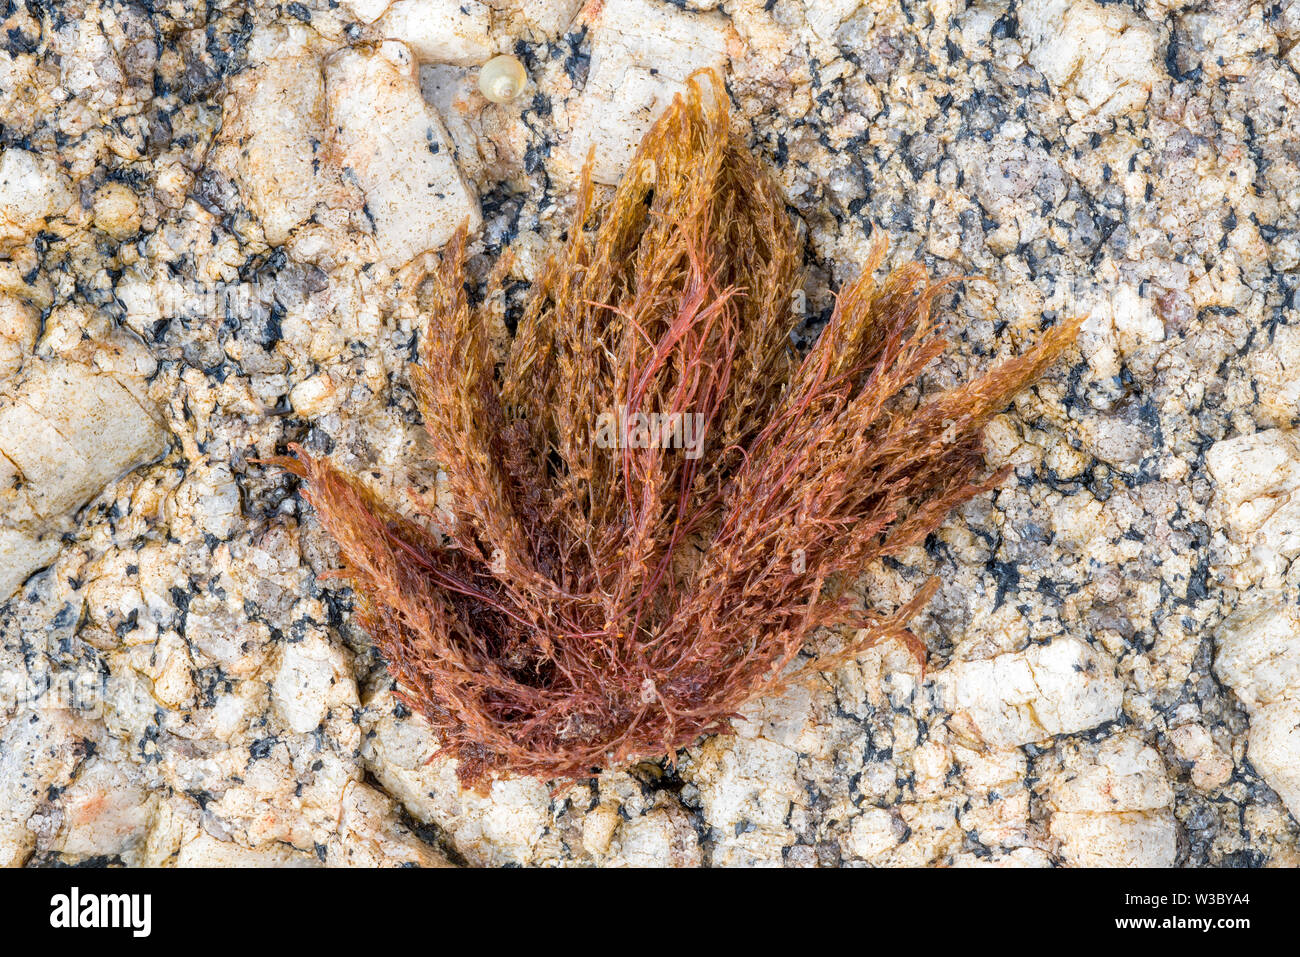 Bornetia secundiflora, red alga washed ashore on rocky beach Stock Photo